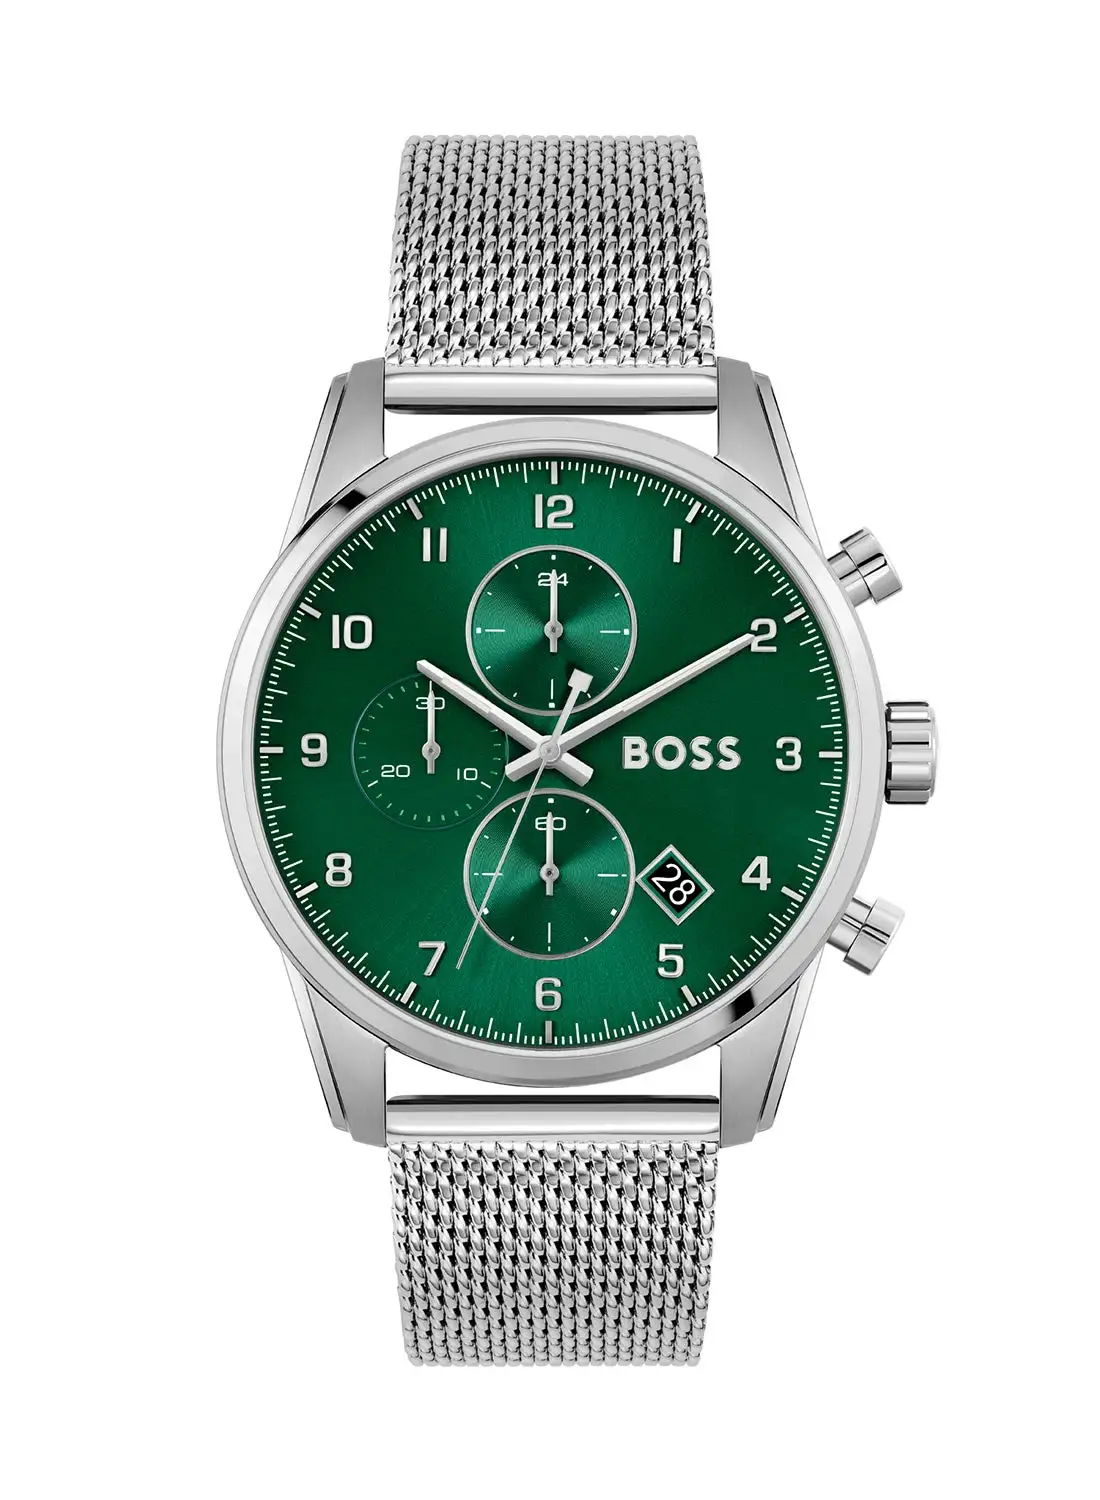 HUGO BOSS Men's Chronograph Round Shape Stainless Steel Wrist Watch 1513938 - 44 Mm